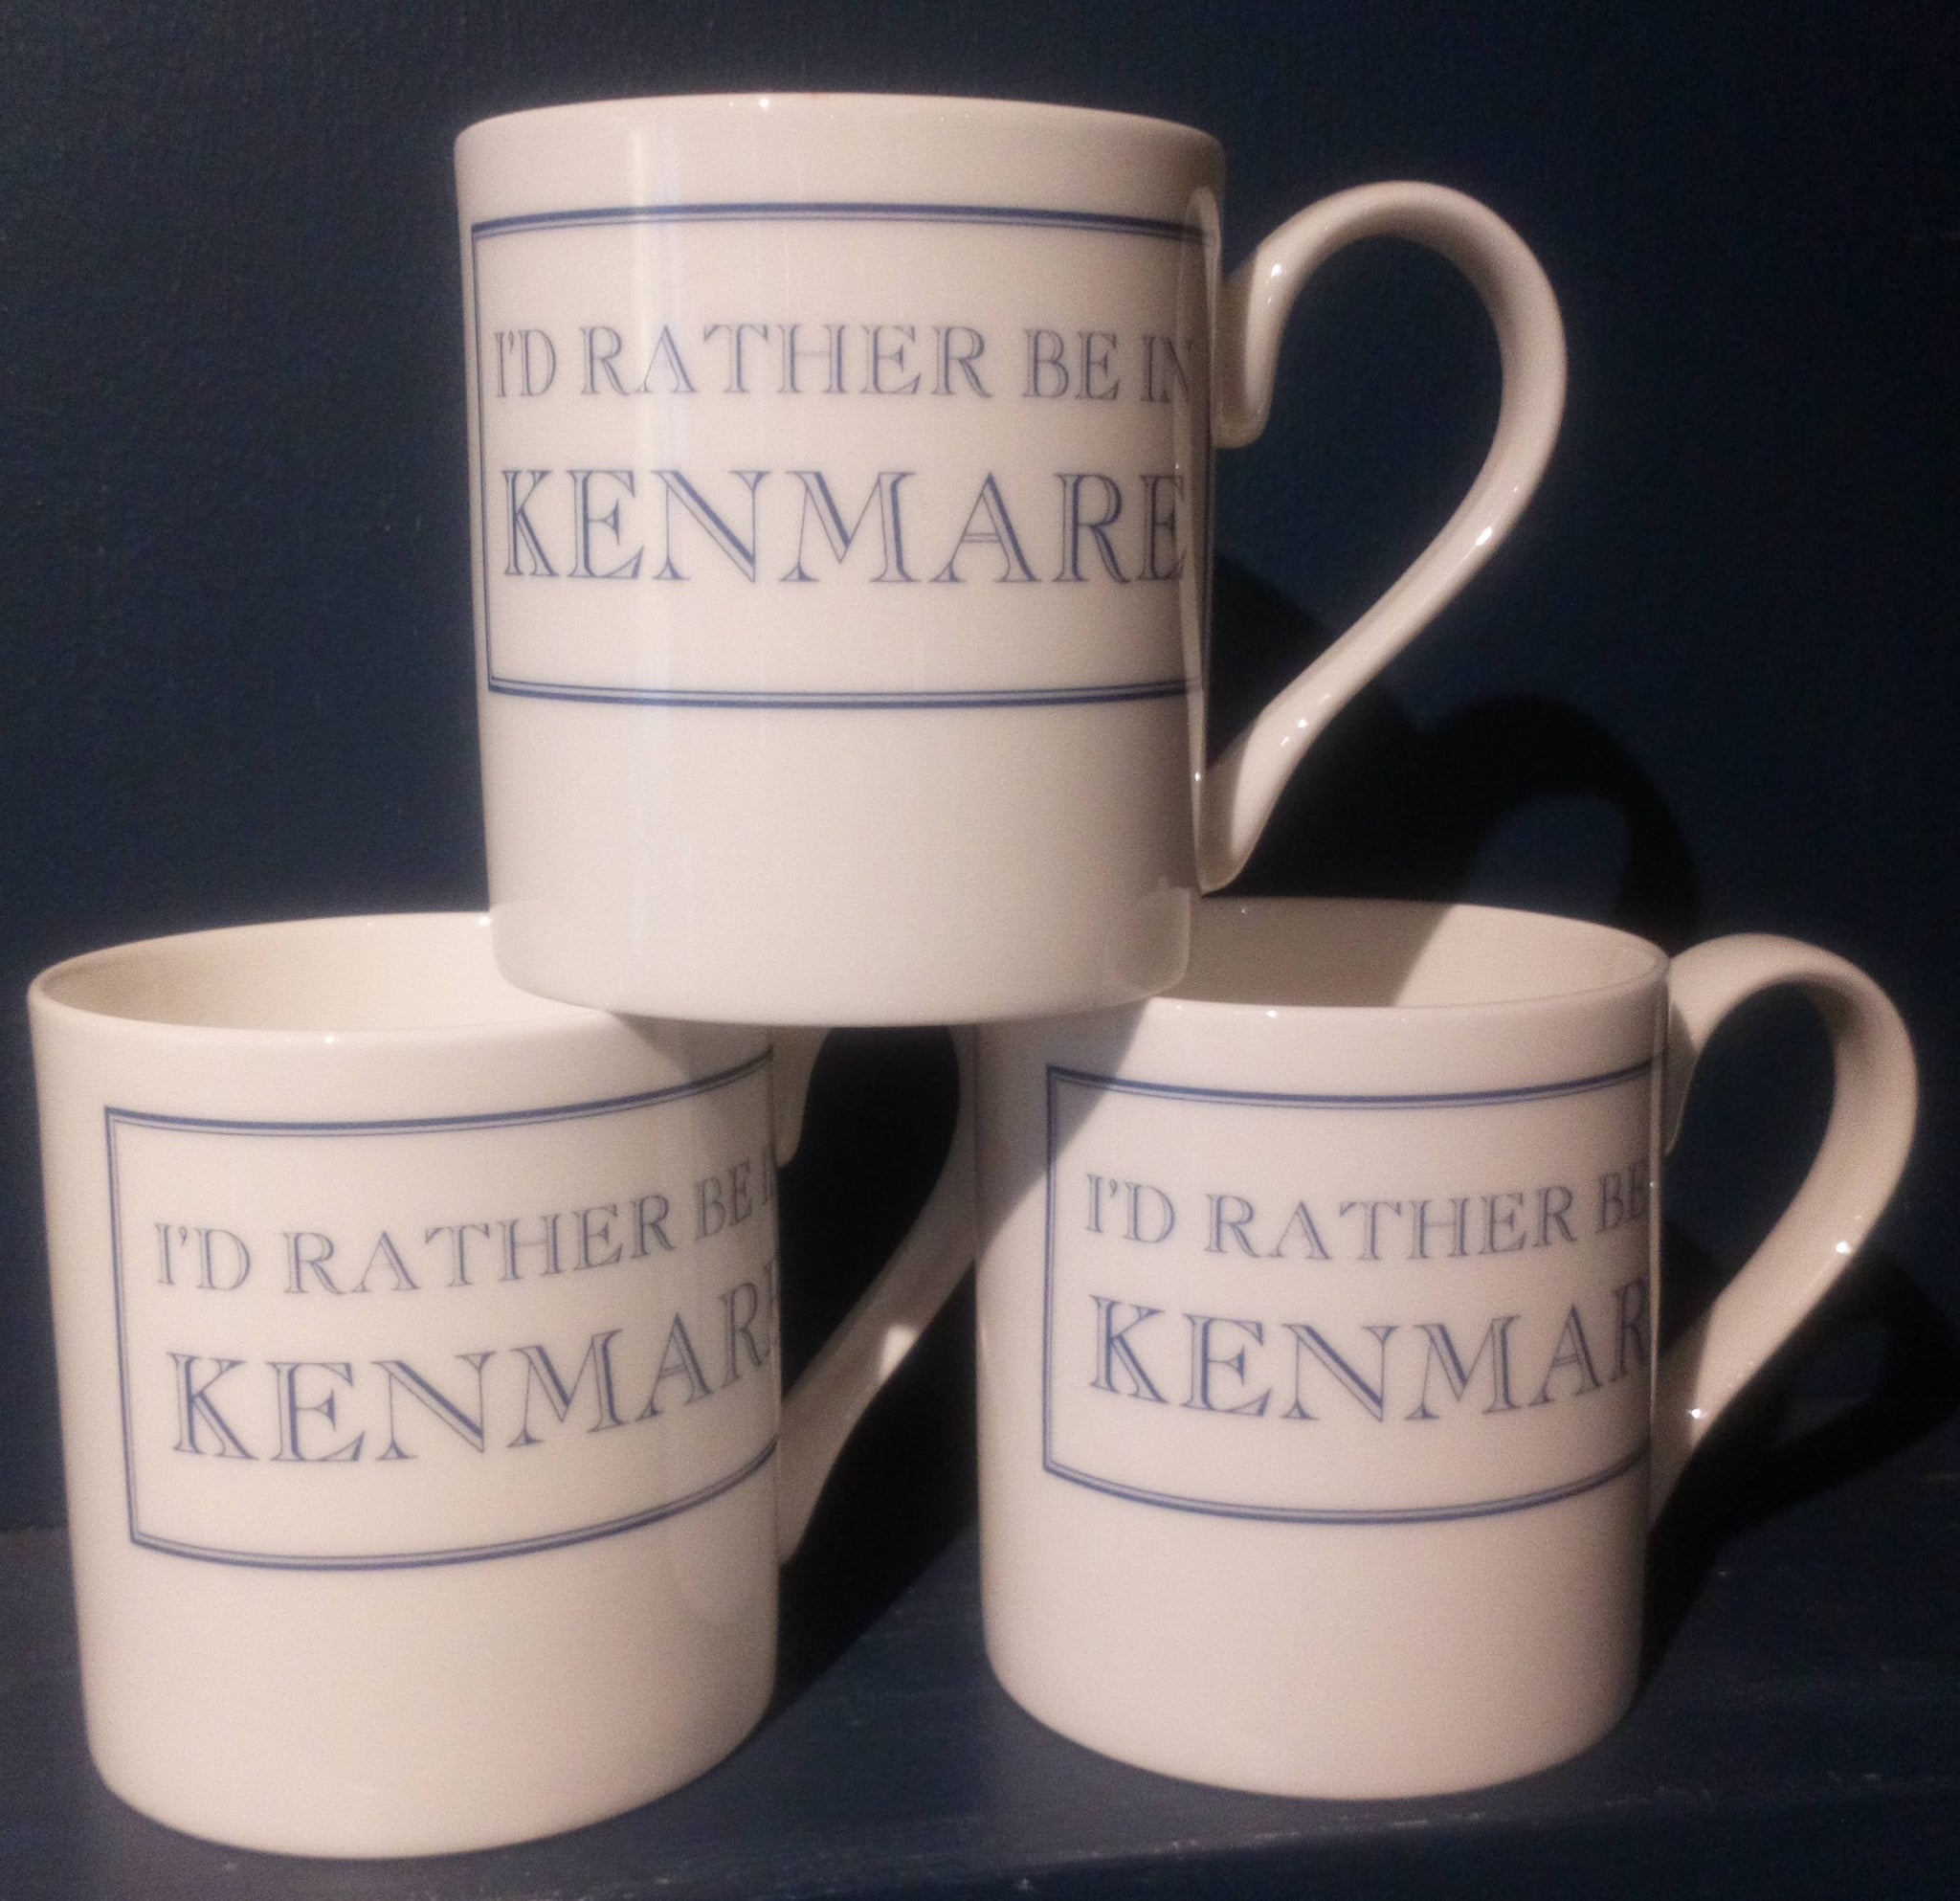 'I'd Rather Be In Kenmare' Mug